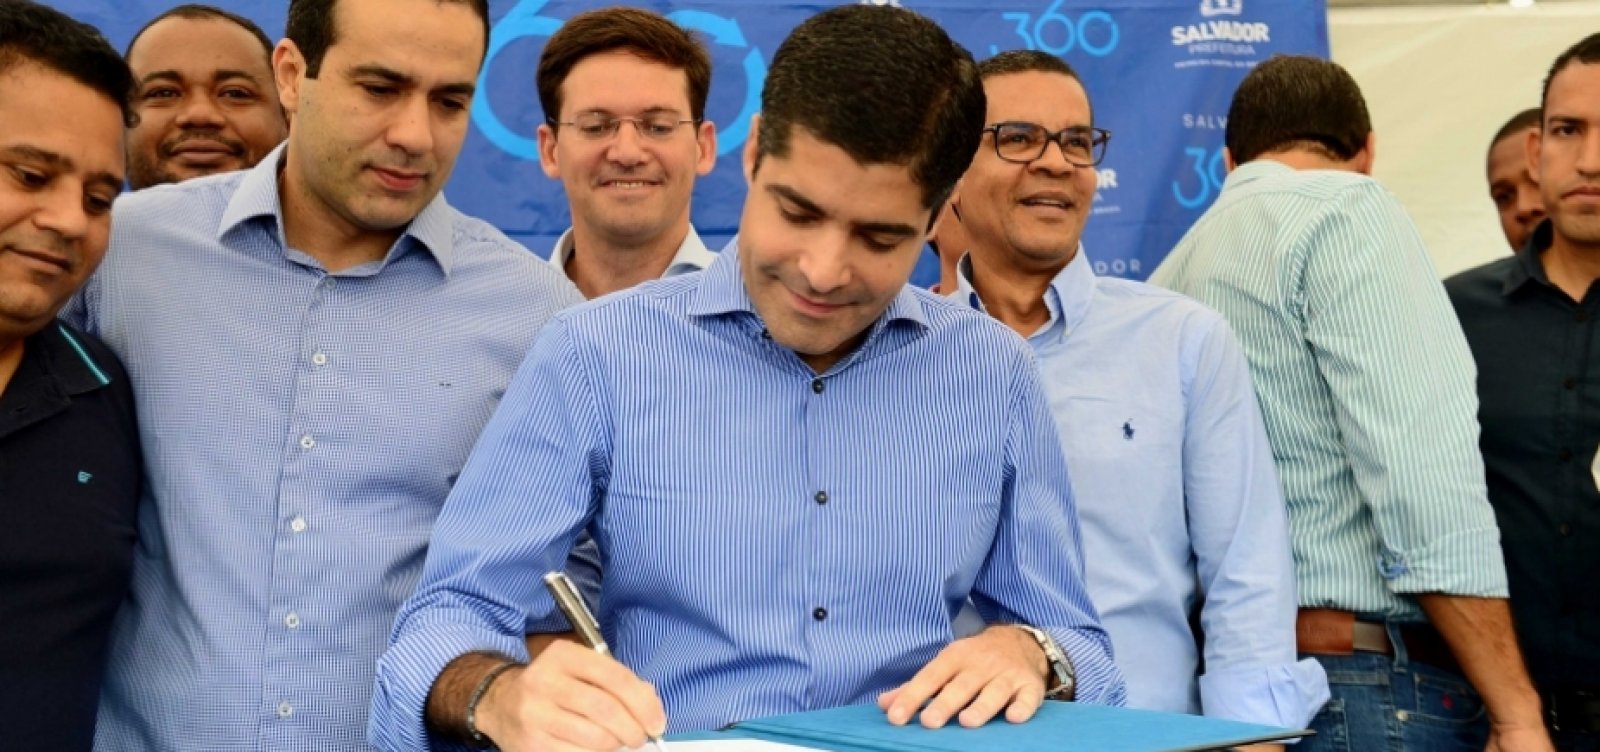 Neto sanciona minirreforma na Prefeitura de Salvador